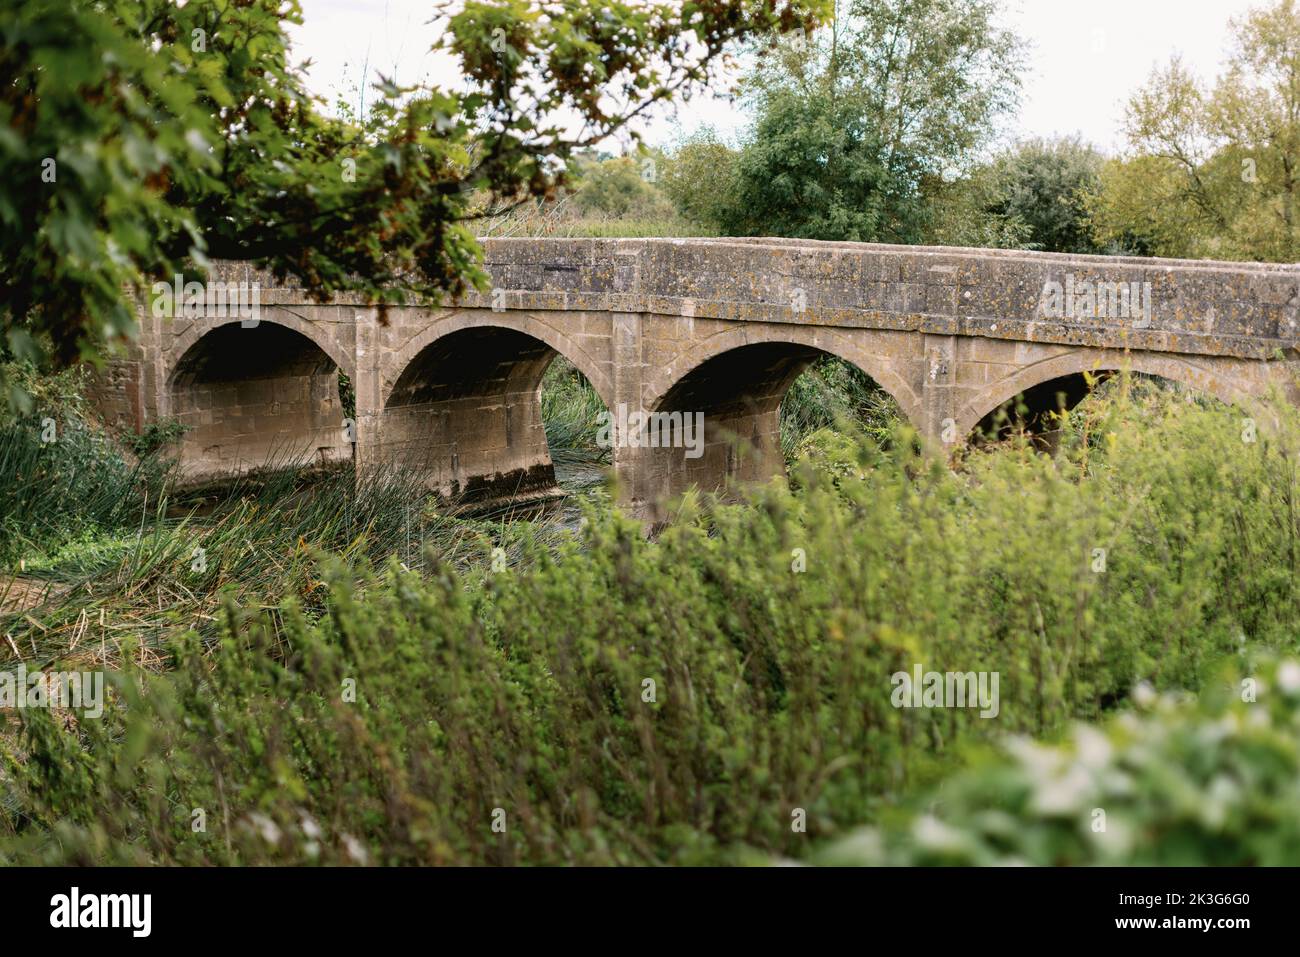 The old arched stone bridge crossing the River Avon in Reybridge (Rey Bridge) near Lacock, Wiltshire, England Stock Photo